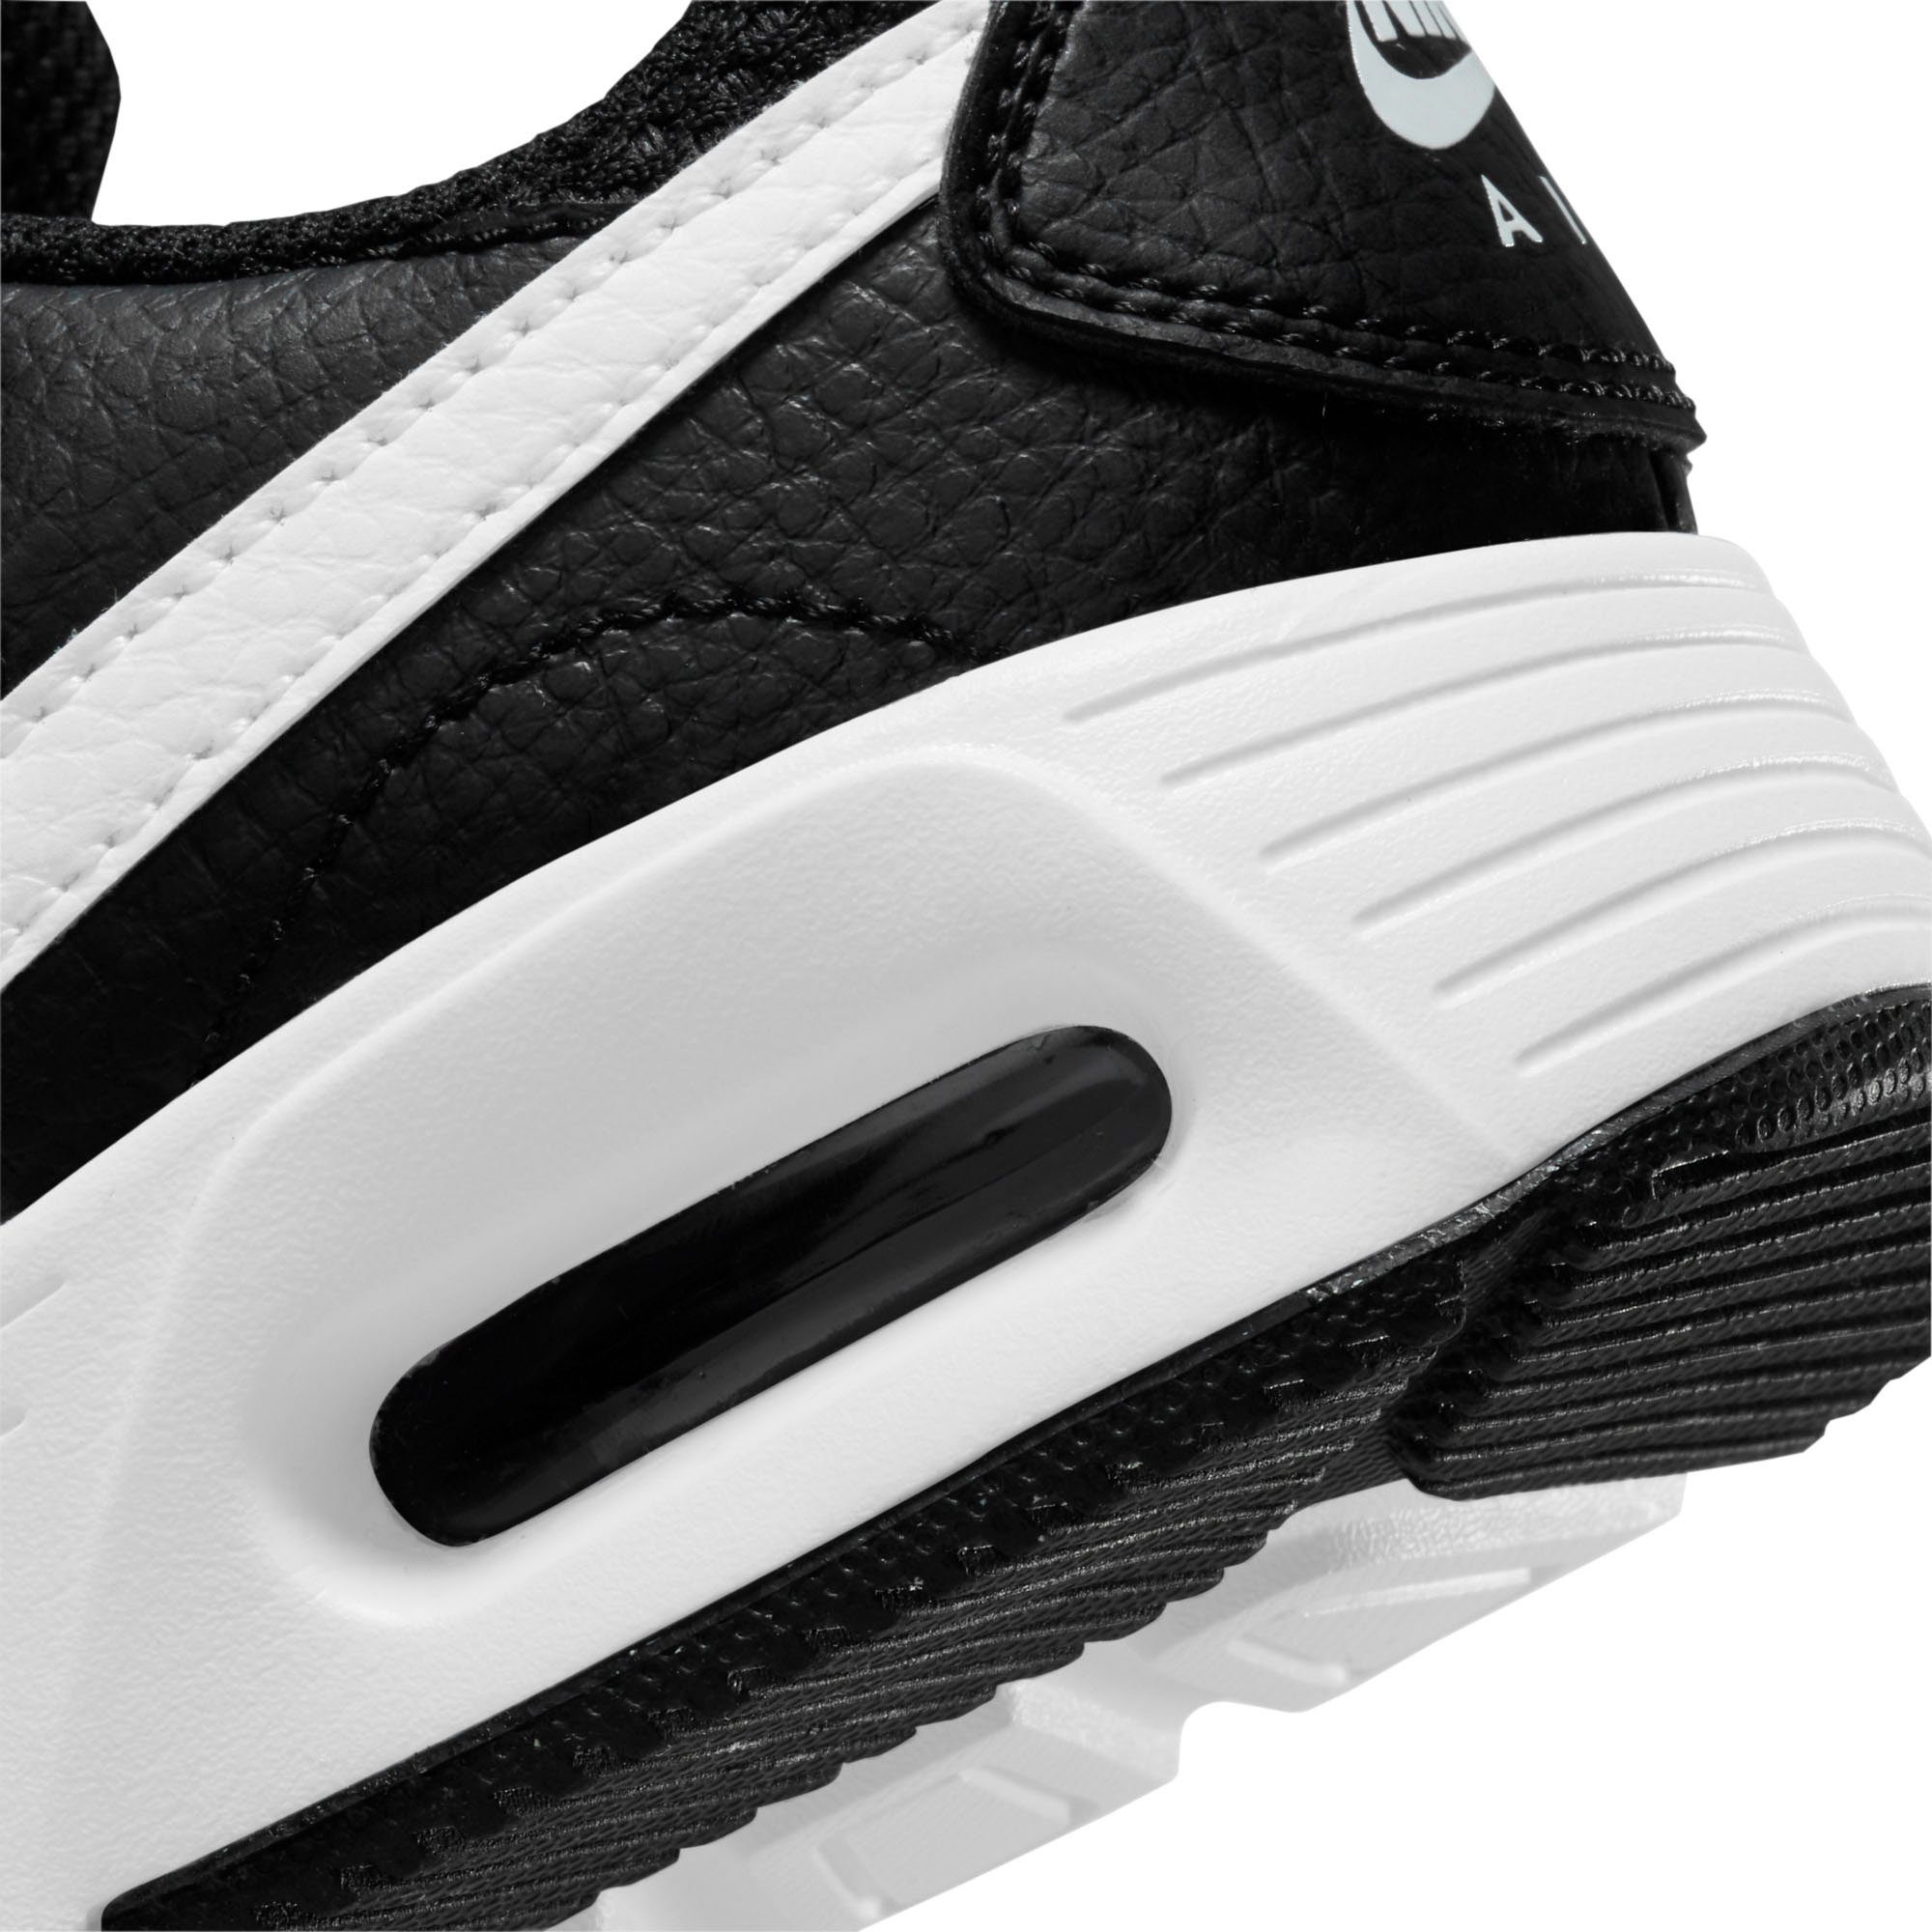 (PS) AIR Sneaker MAX SC schwarz-weiß Sportswear Nike